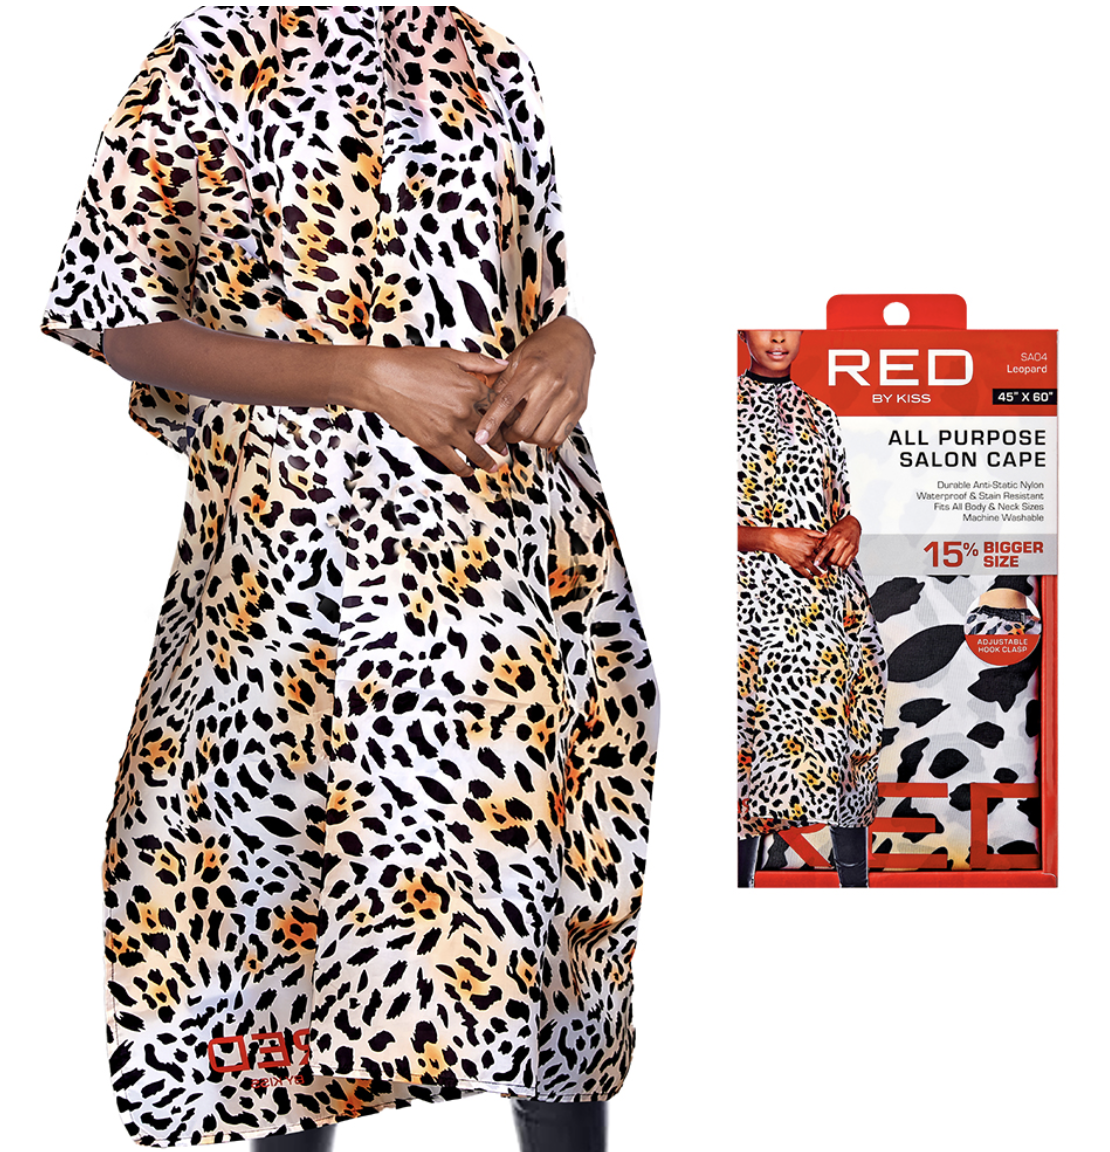 Red by Kiss  Salon All Purpose Salon Cap Leopard, Nylon #SA04 - BPolished Beauty Supply